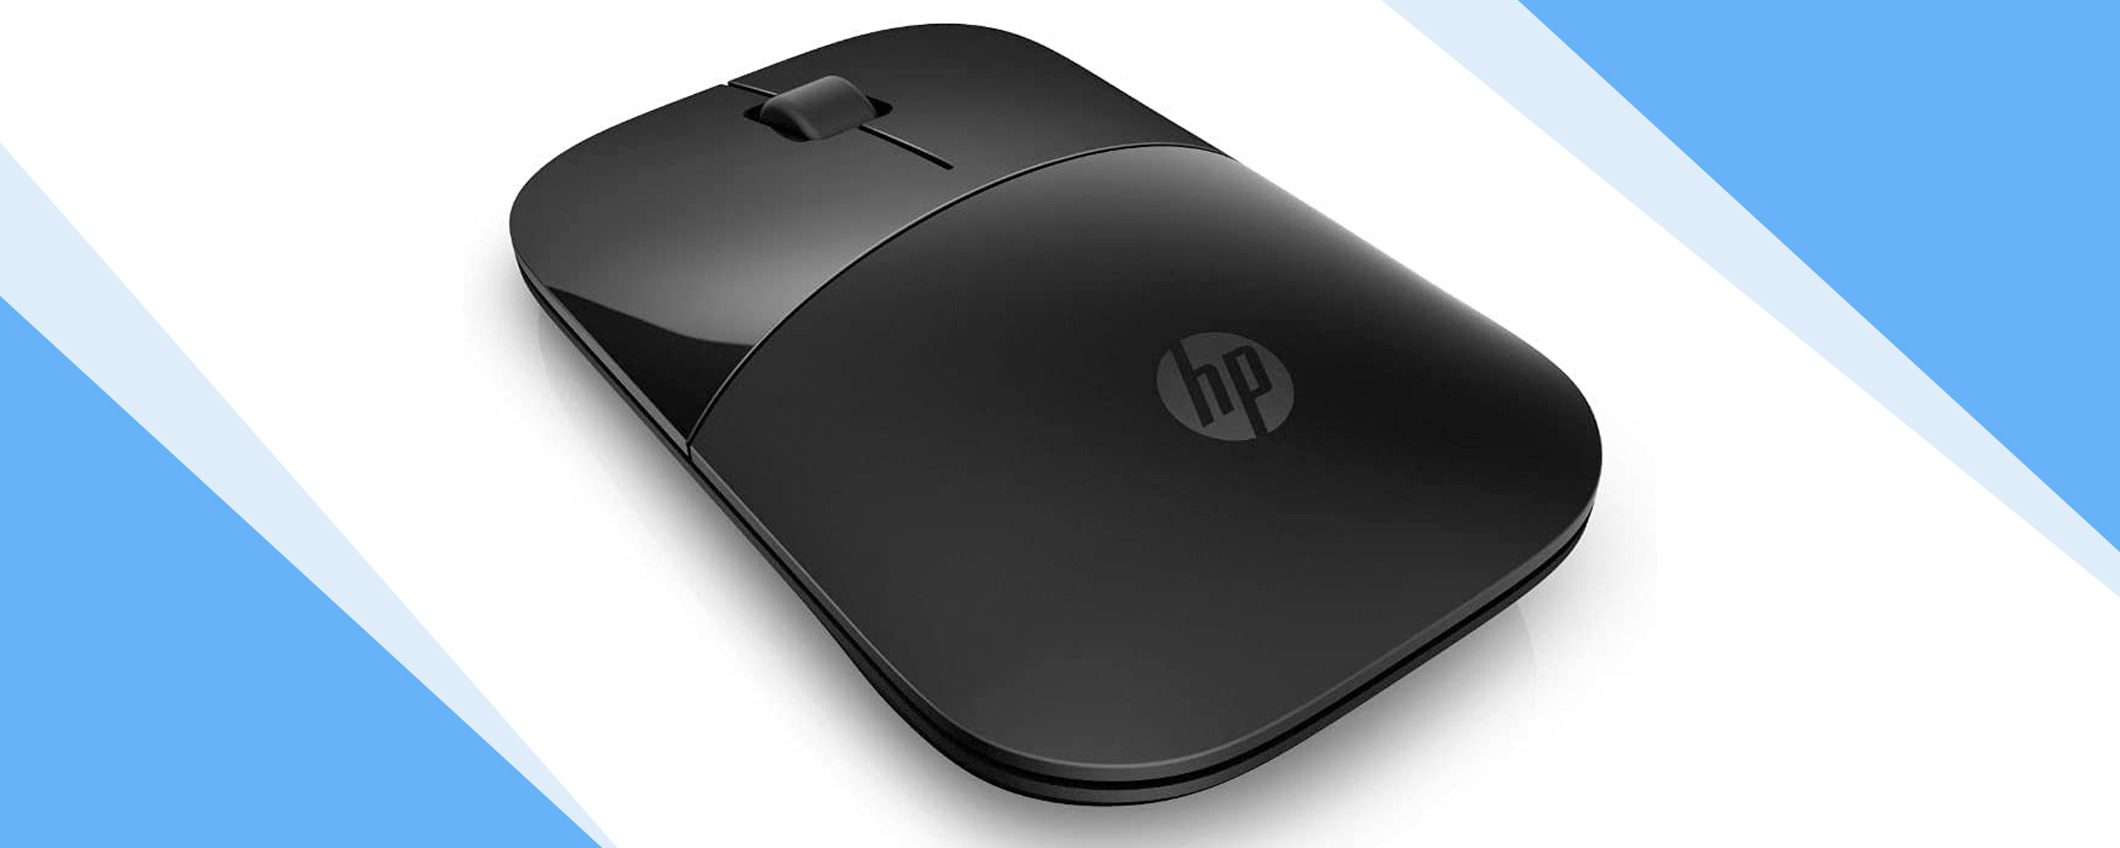 HP Z3700: ottimo mouse wireless, sconto 44%